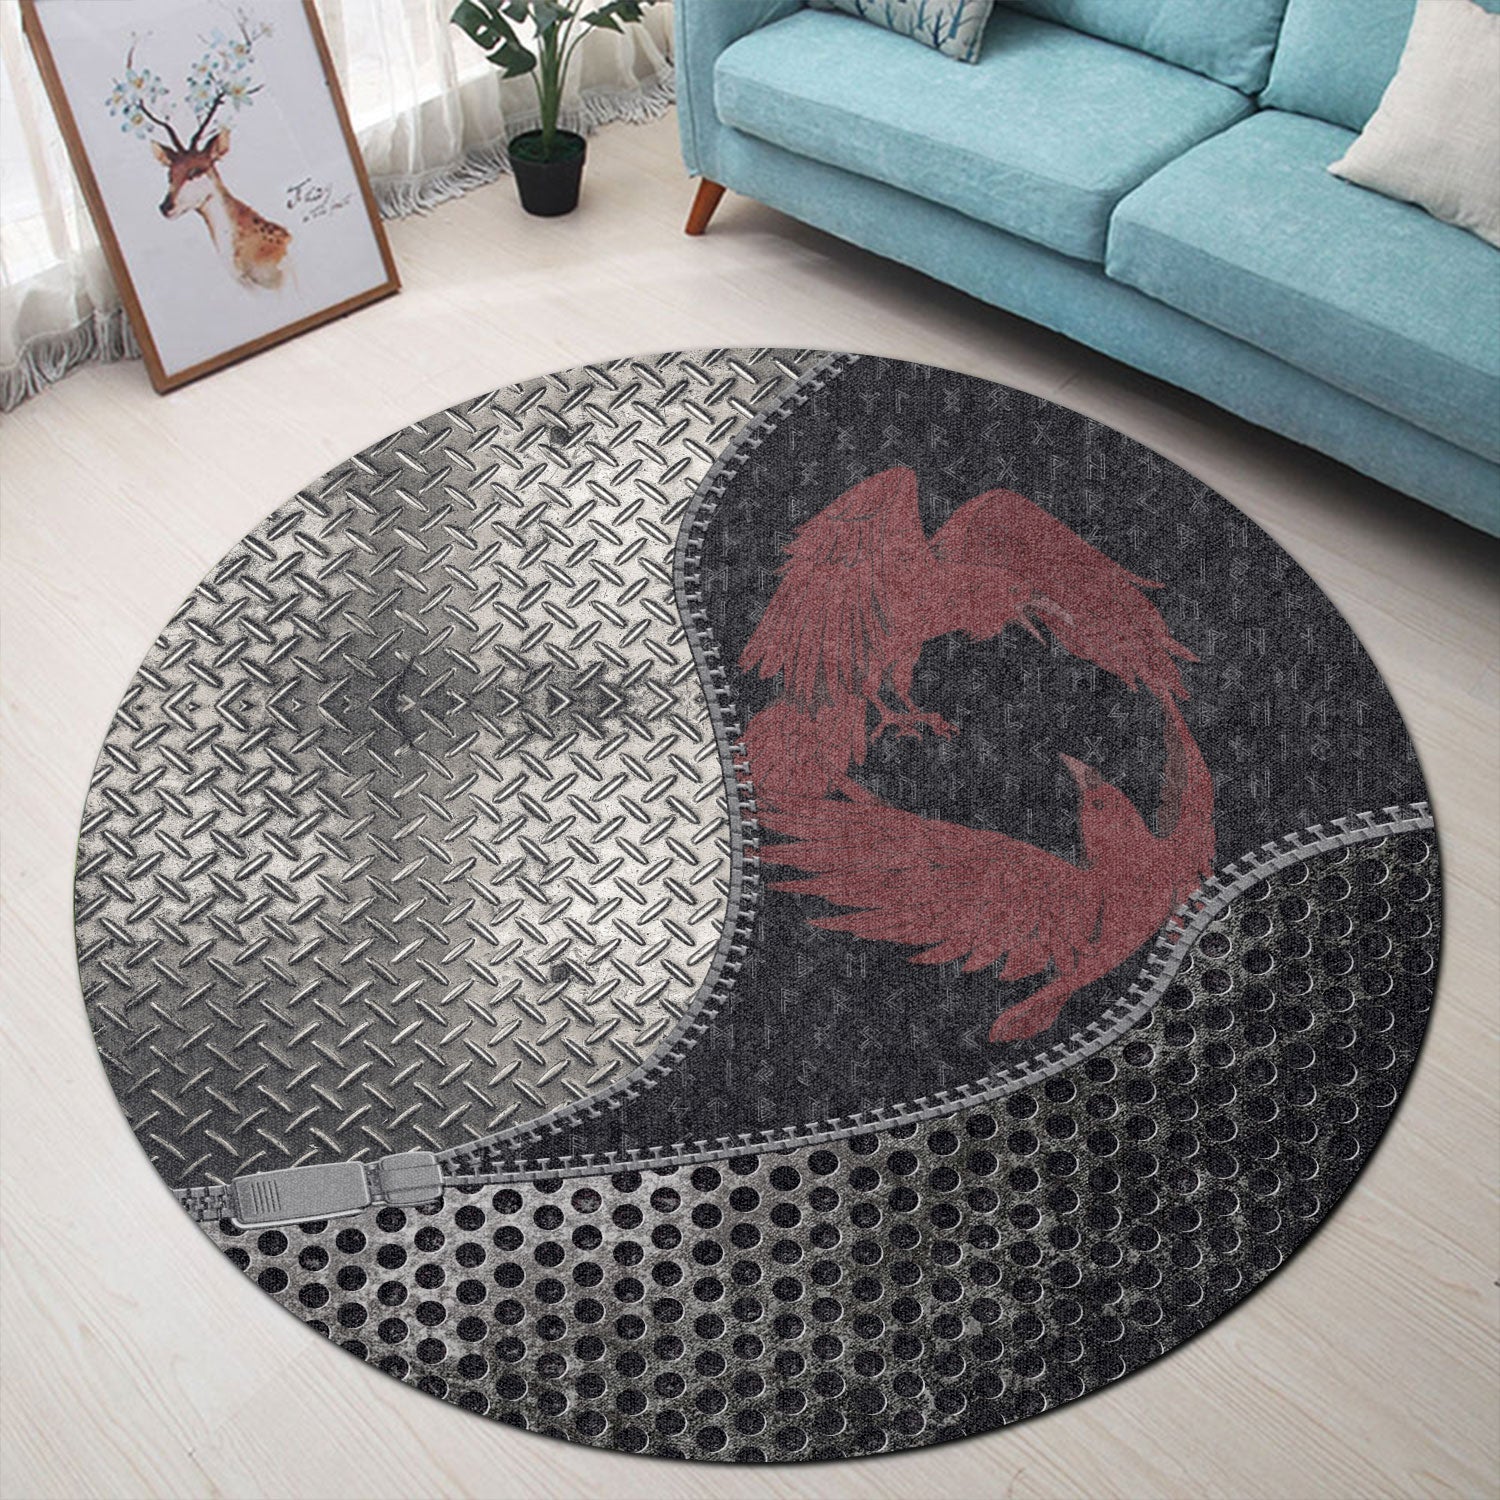 viking-carpet-dark-red-with-odins-ravens-round-carpet